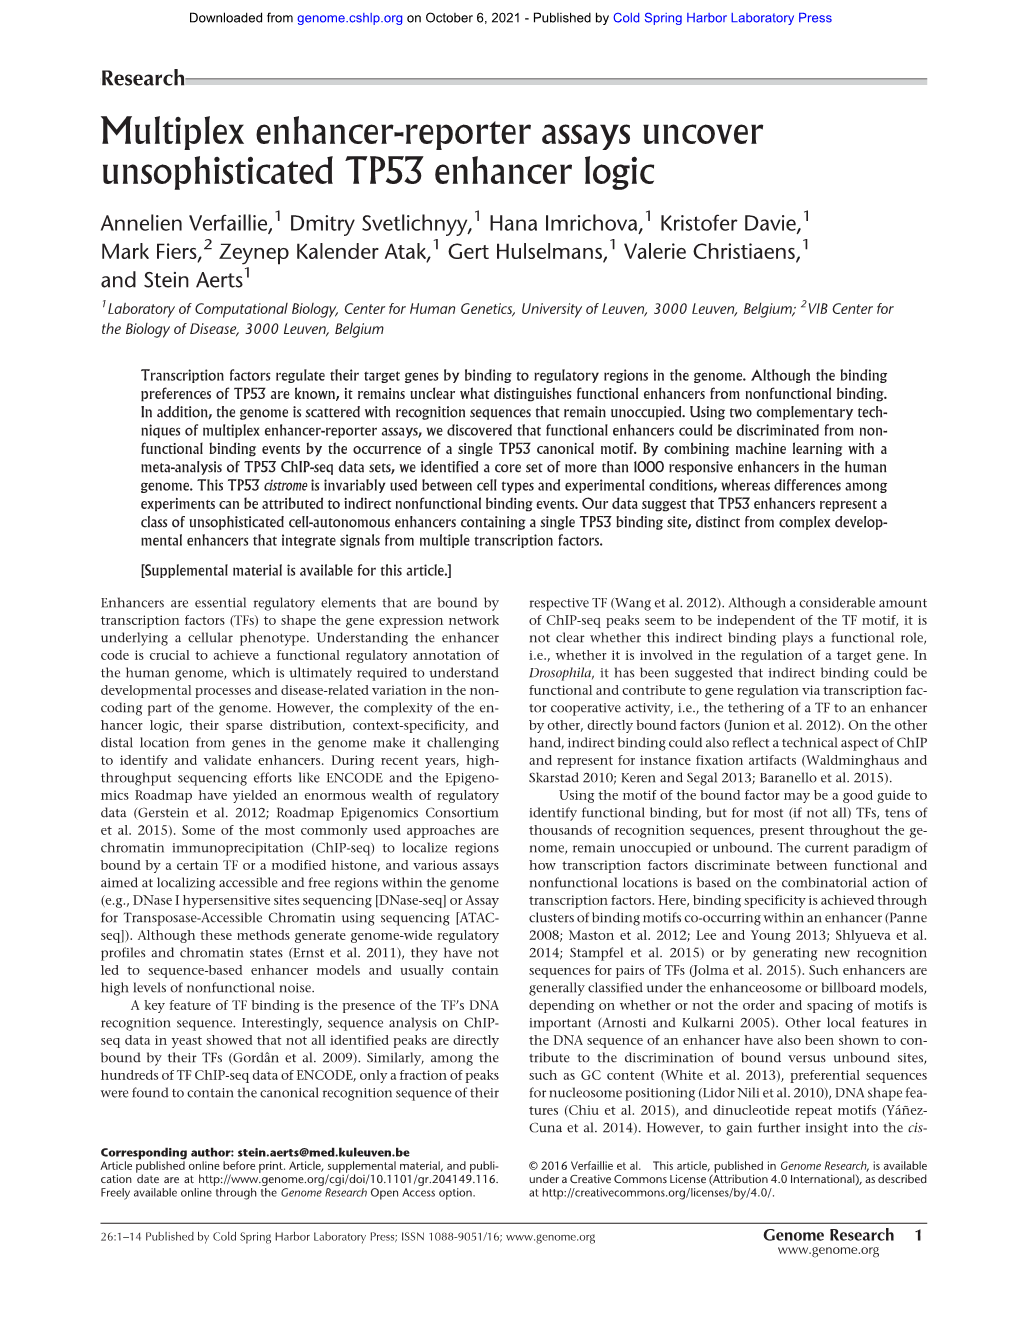 Multiplex Enhancer-Reporter Assays Uncover Unsophisticated TP53 Enhancer Logic